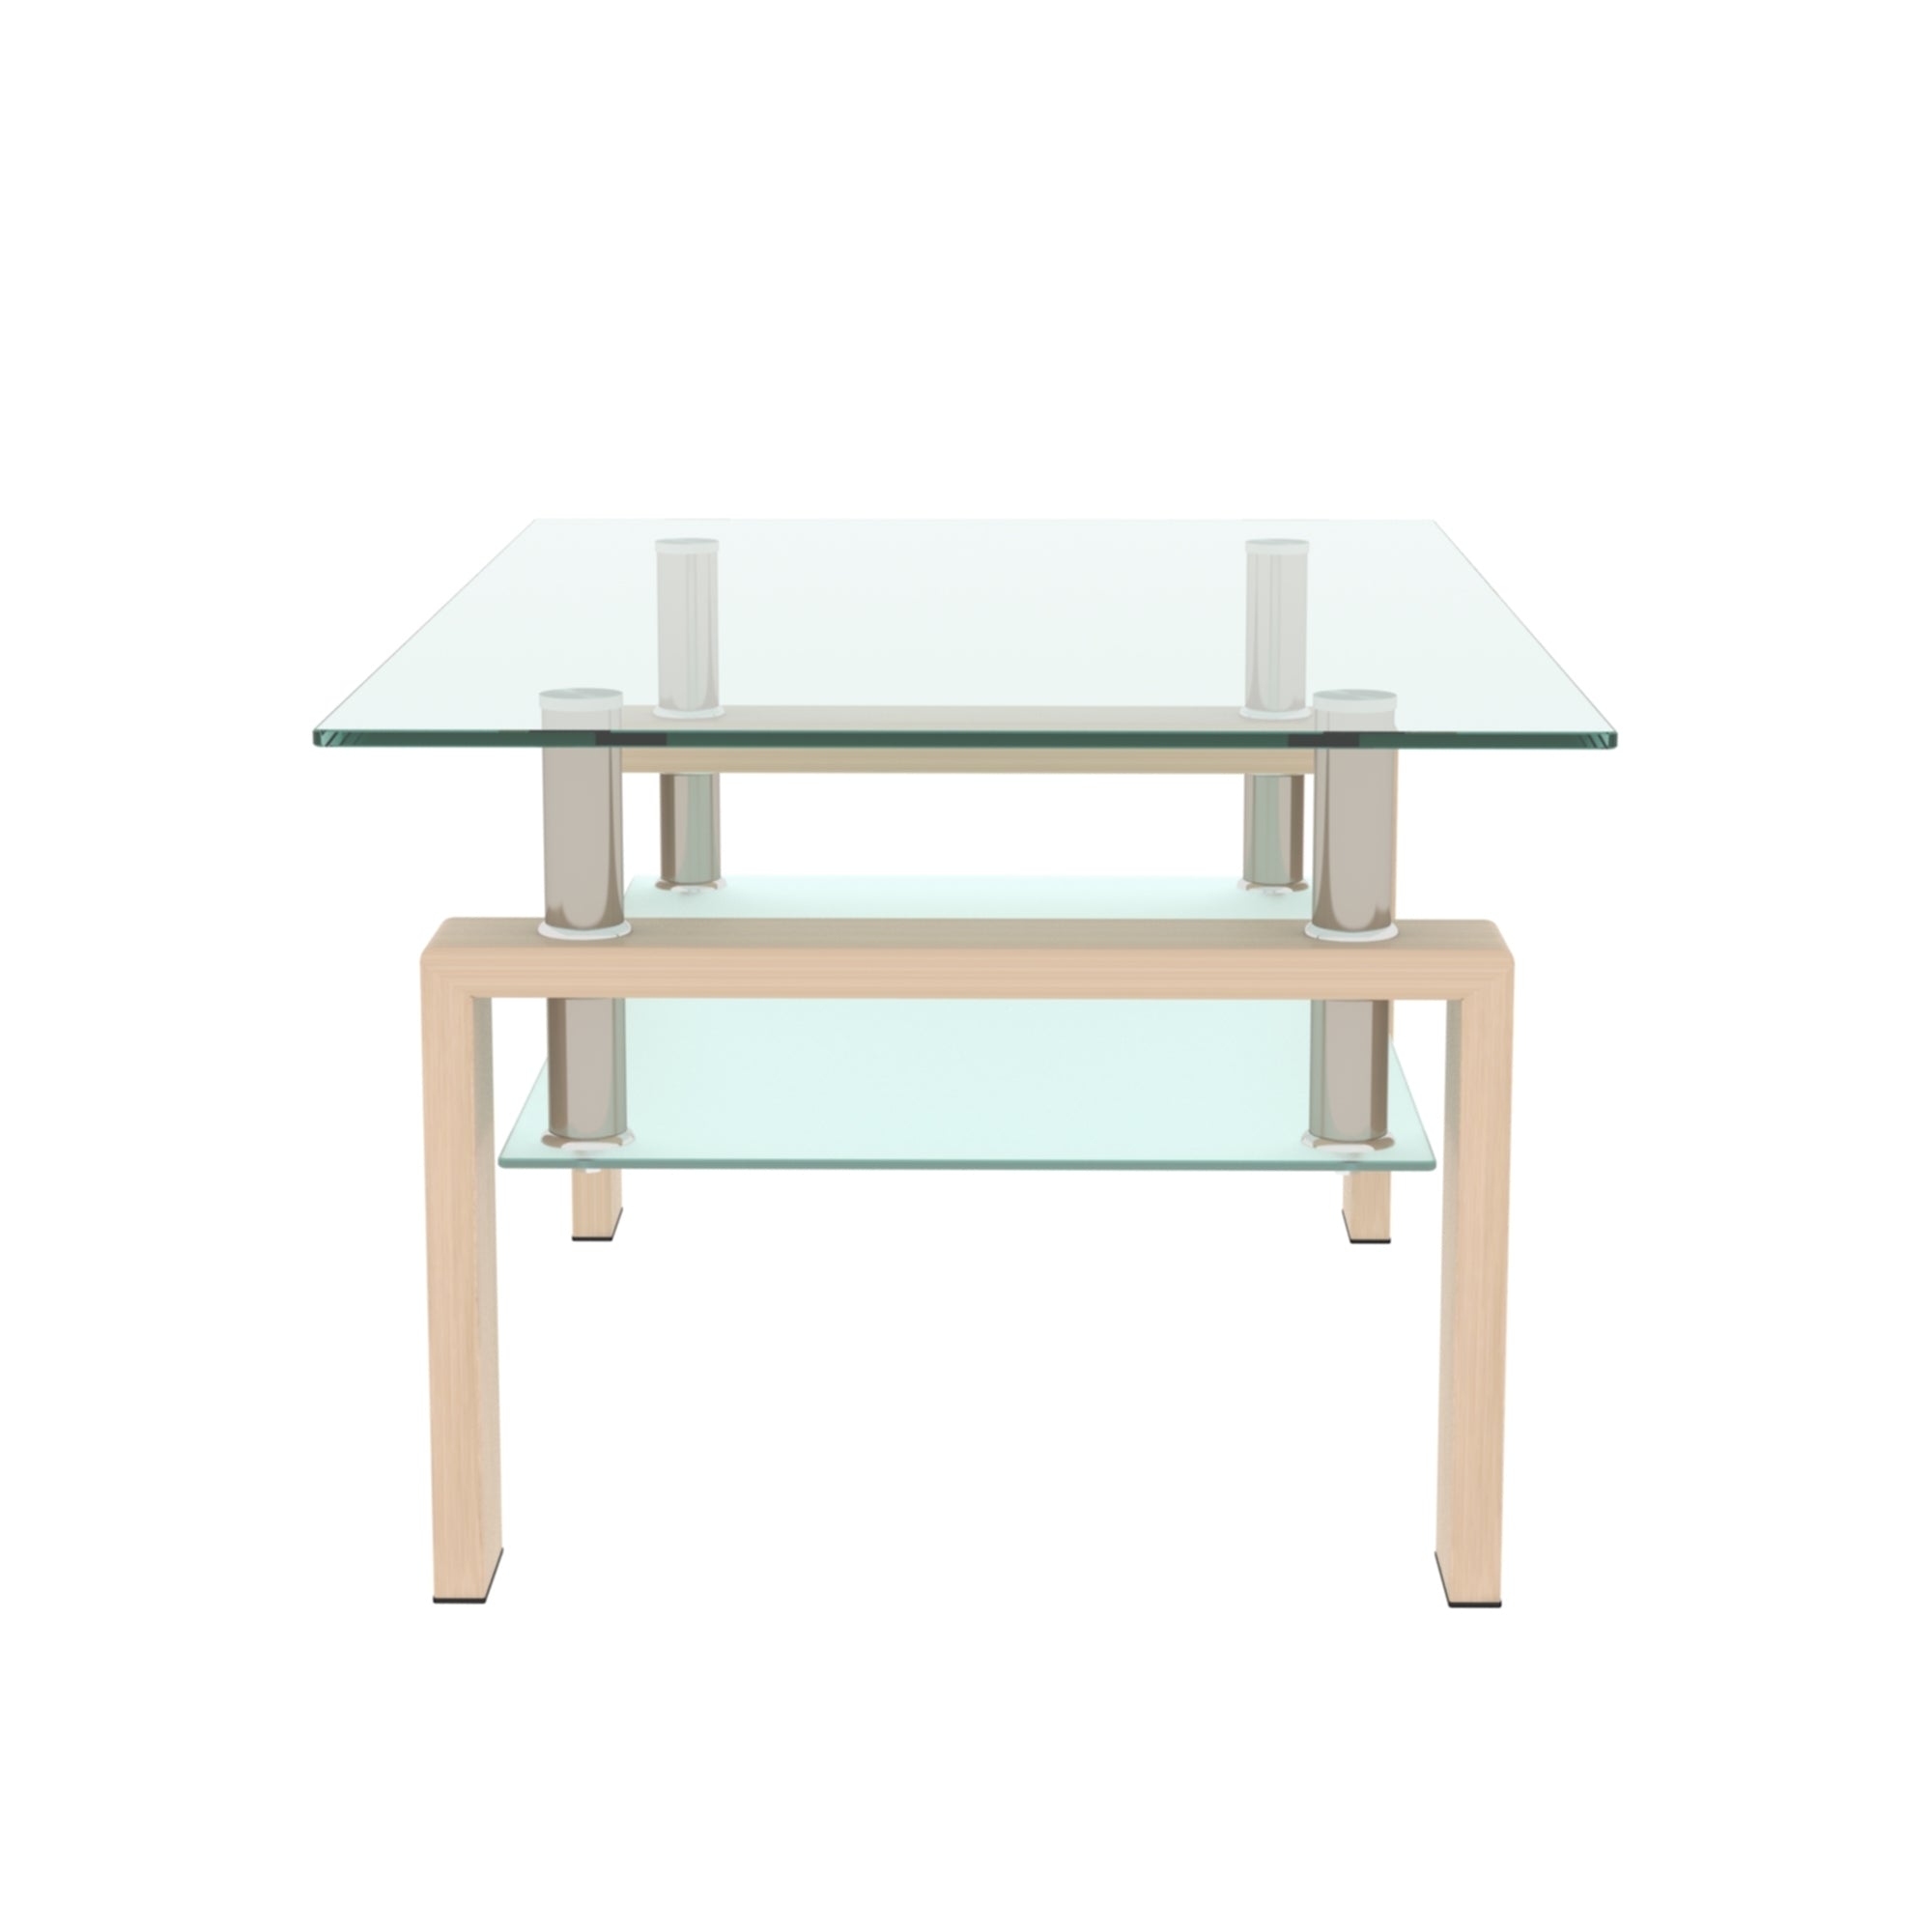 Luna Rectangle  Glass Coffee Table With Light Oak Metal Legs